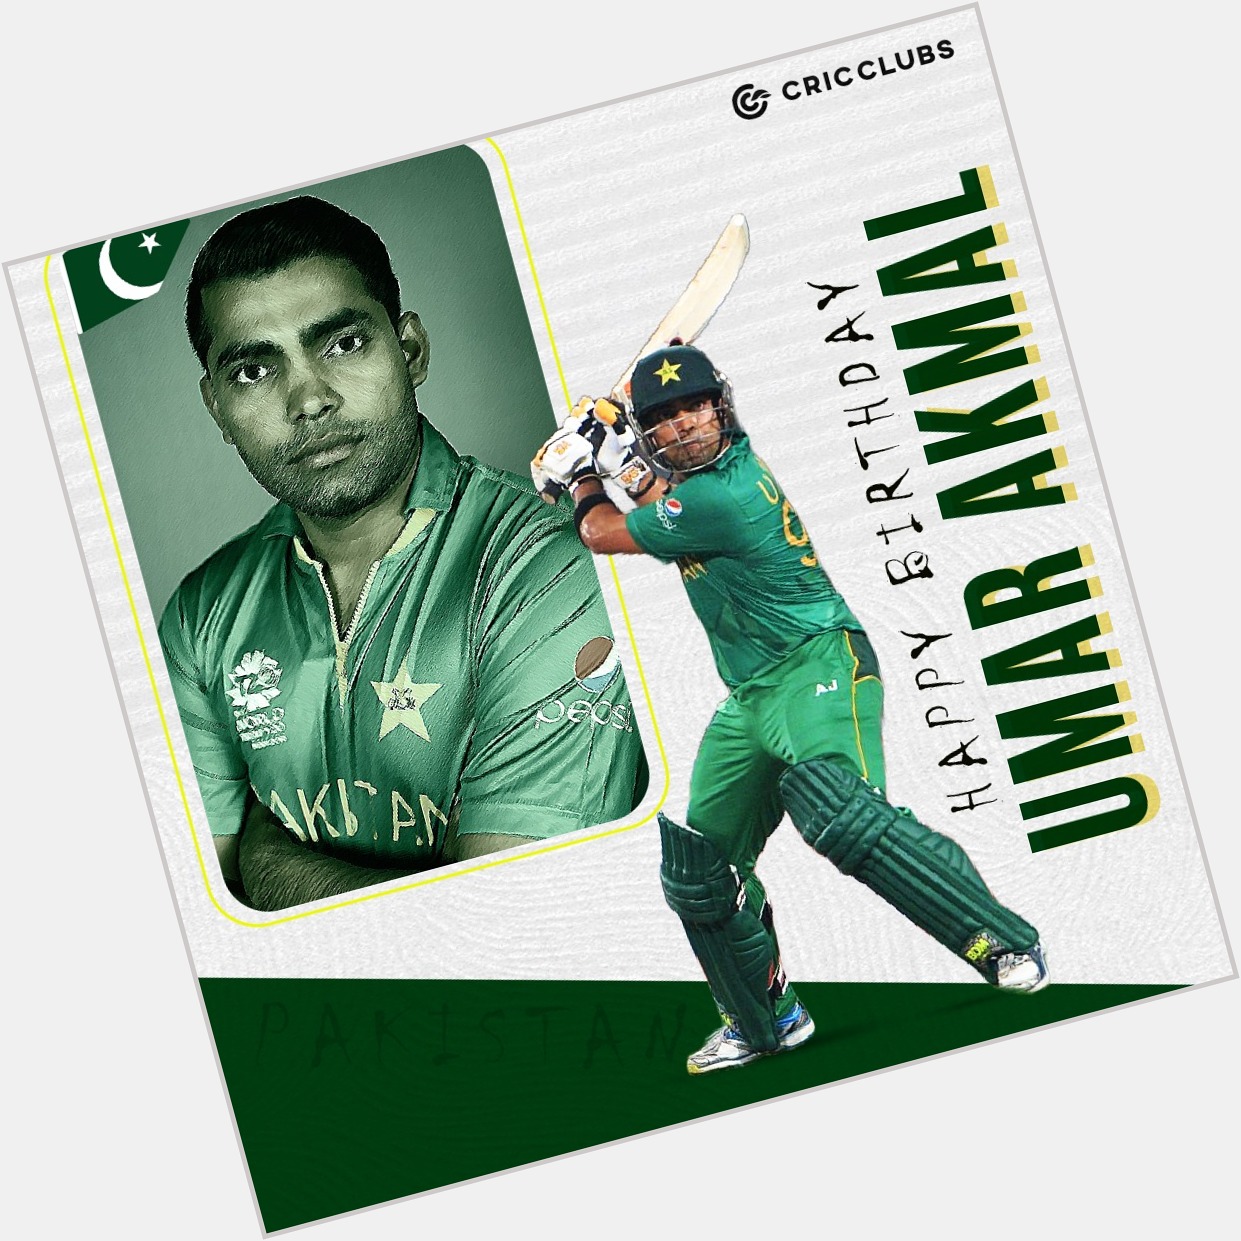   221 International Matches 5887 Runs 139 WK Catches
Wishing Pakistan Batman Umar Akmal a very Happy Birthday 